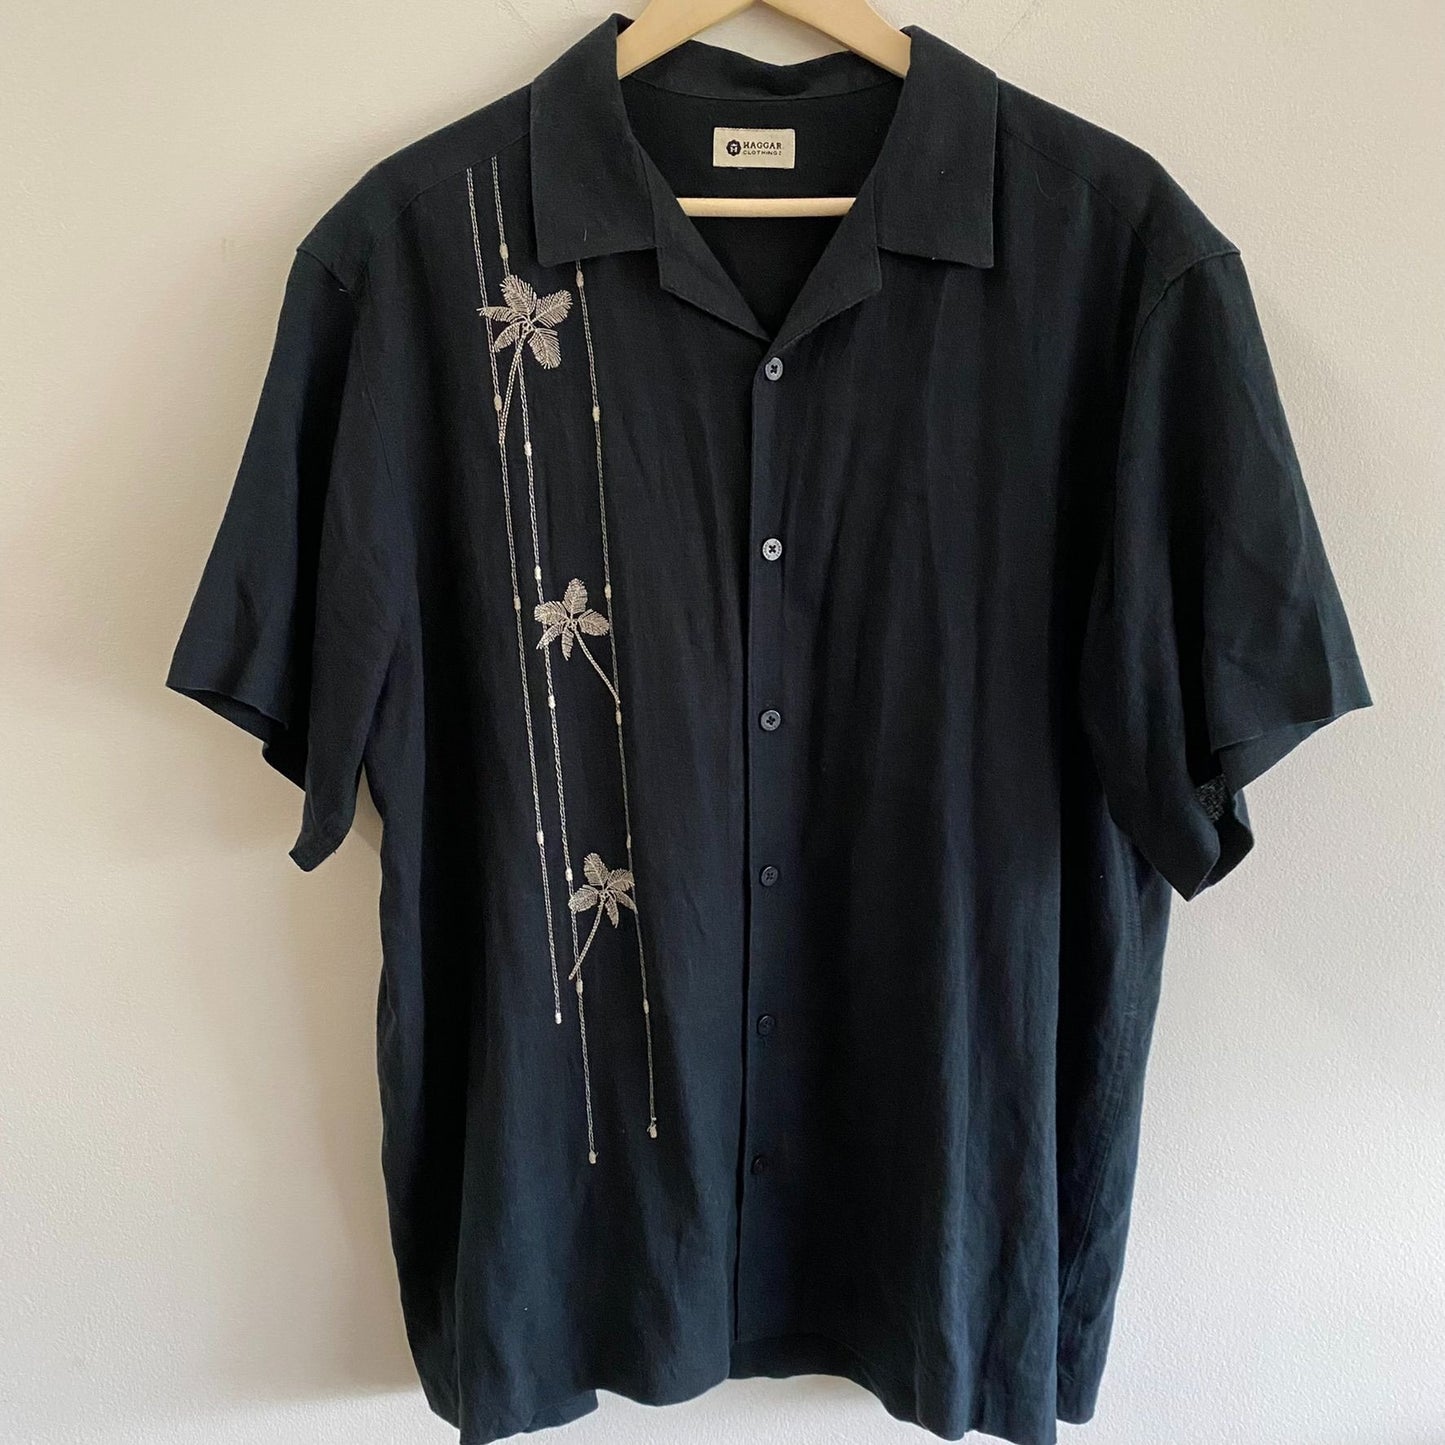 Haggar Black Floral S/S Shirt